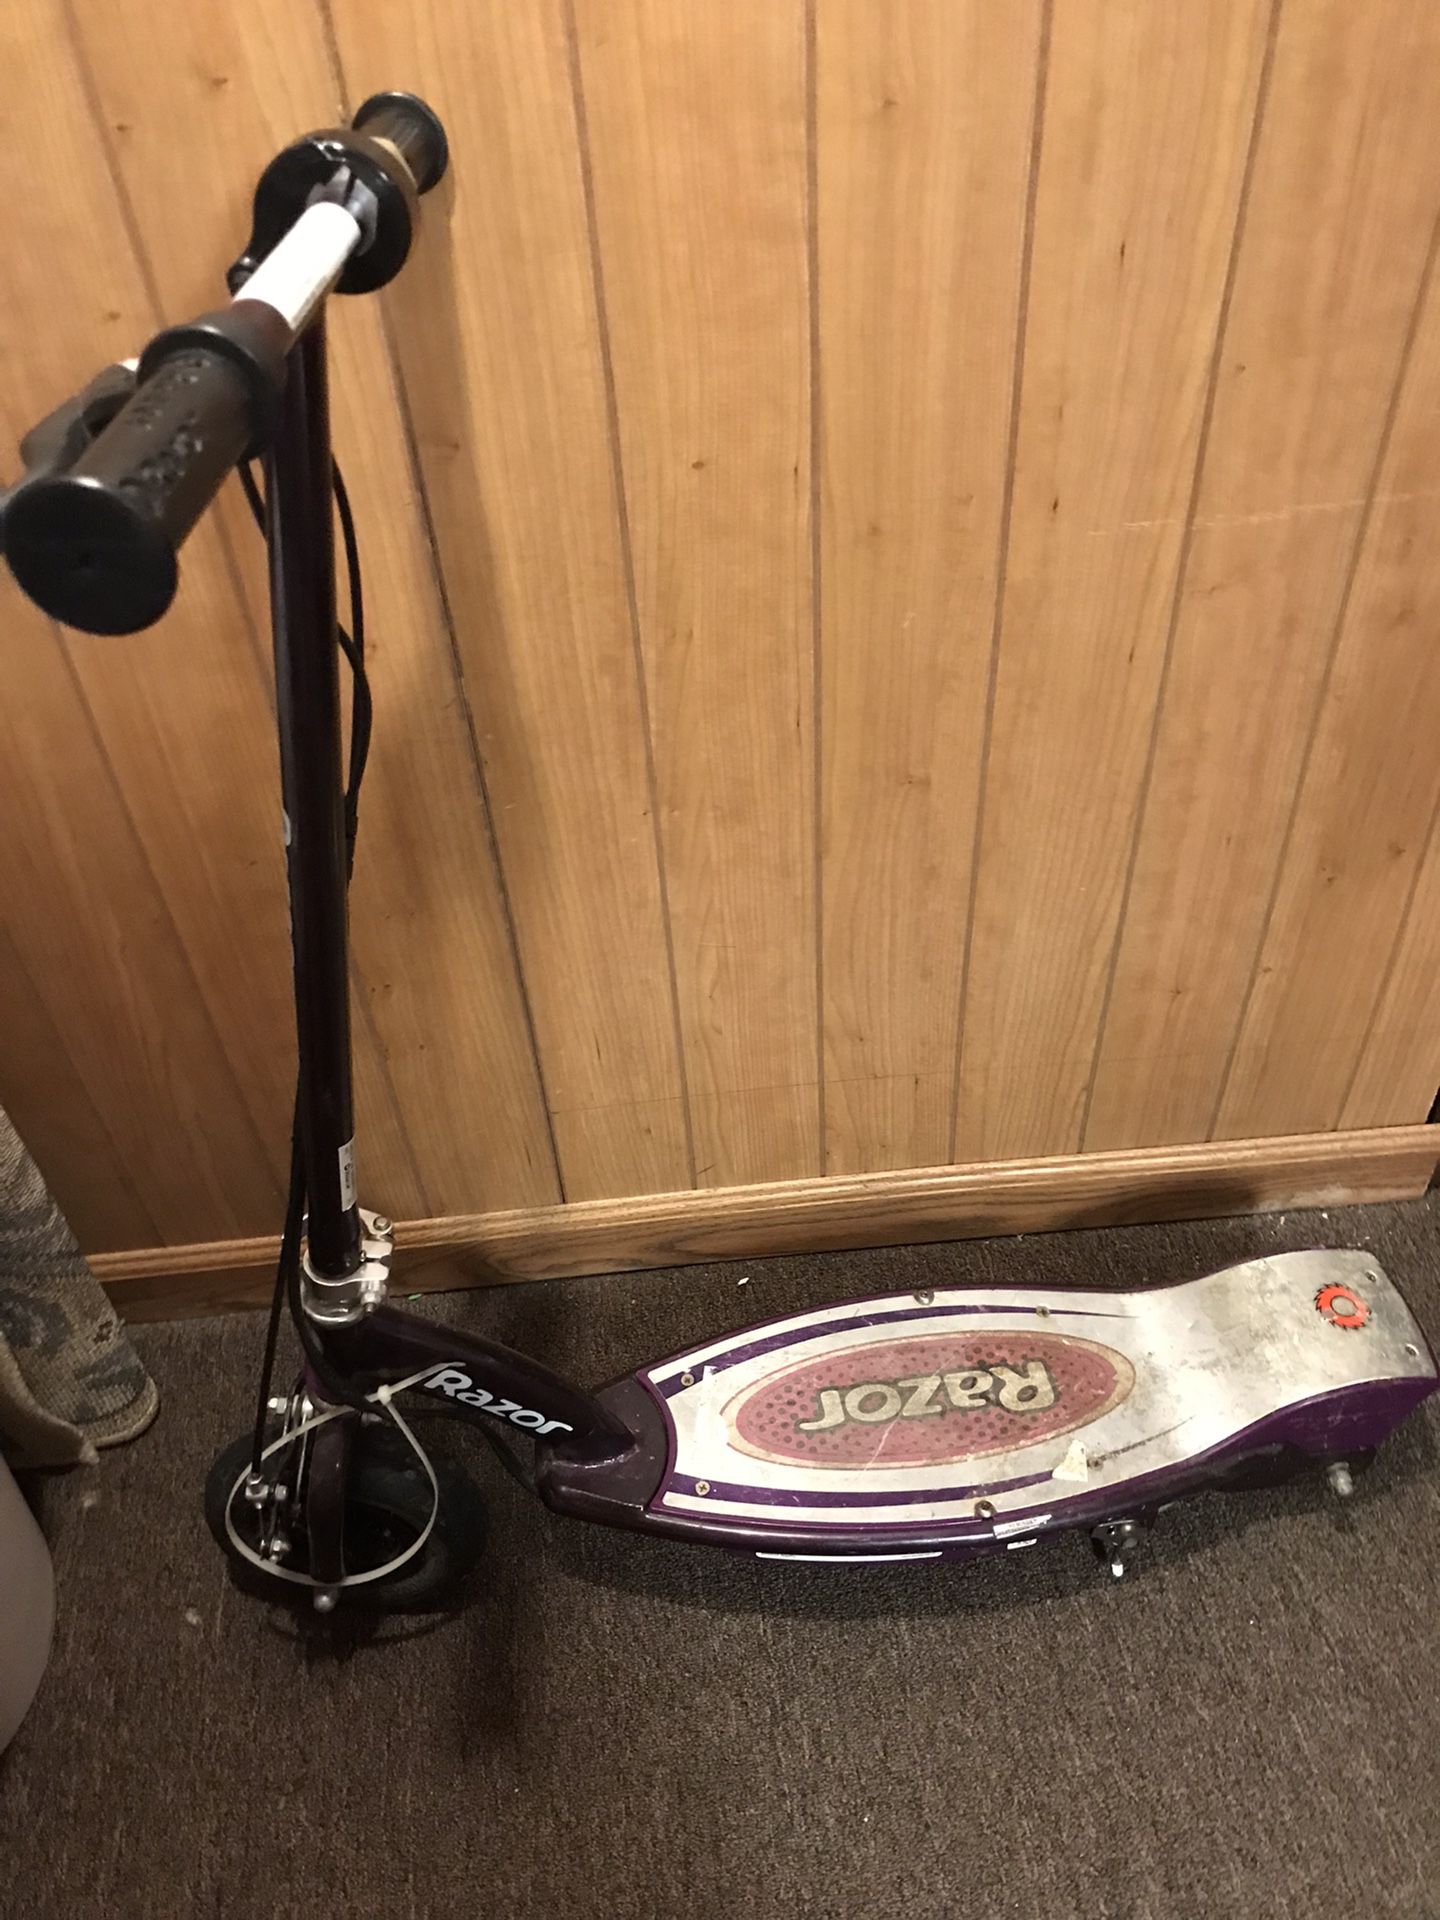 Razor Electric Scooter 